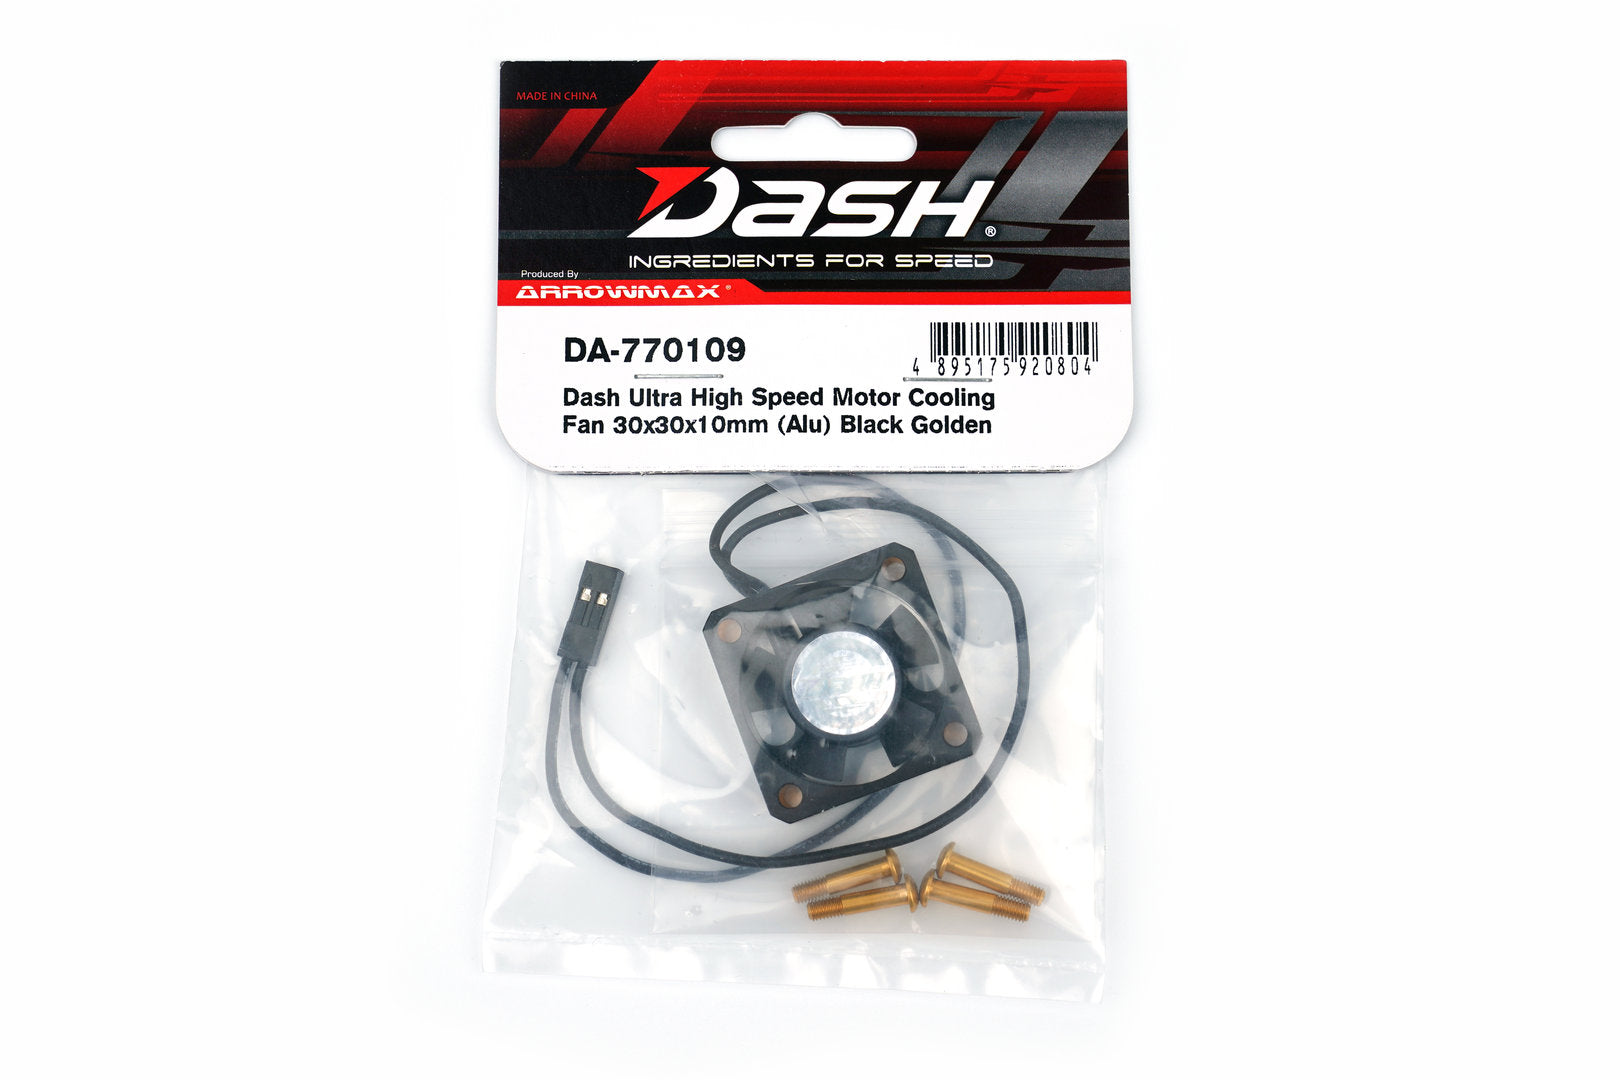 Dash Ultra High Speed Motor Cooling Fan 30x30x10mm (Alu) Black Golden (DA-770109) - RACERC